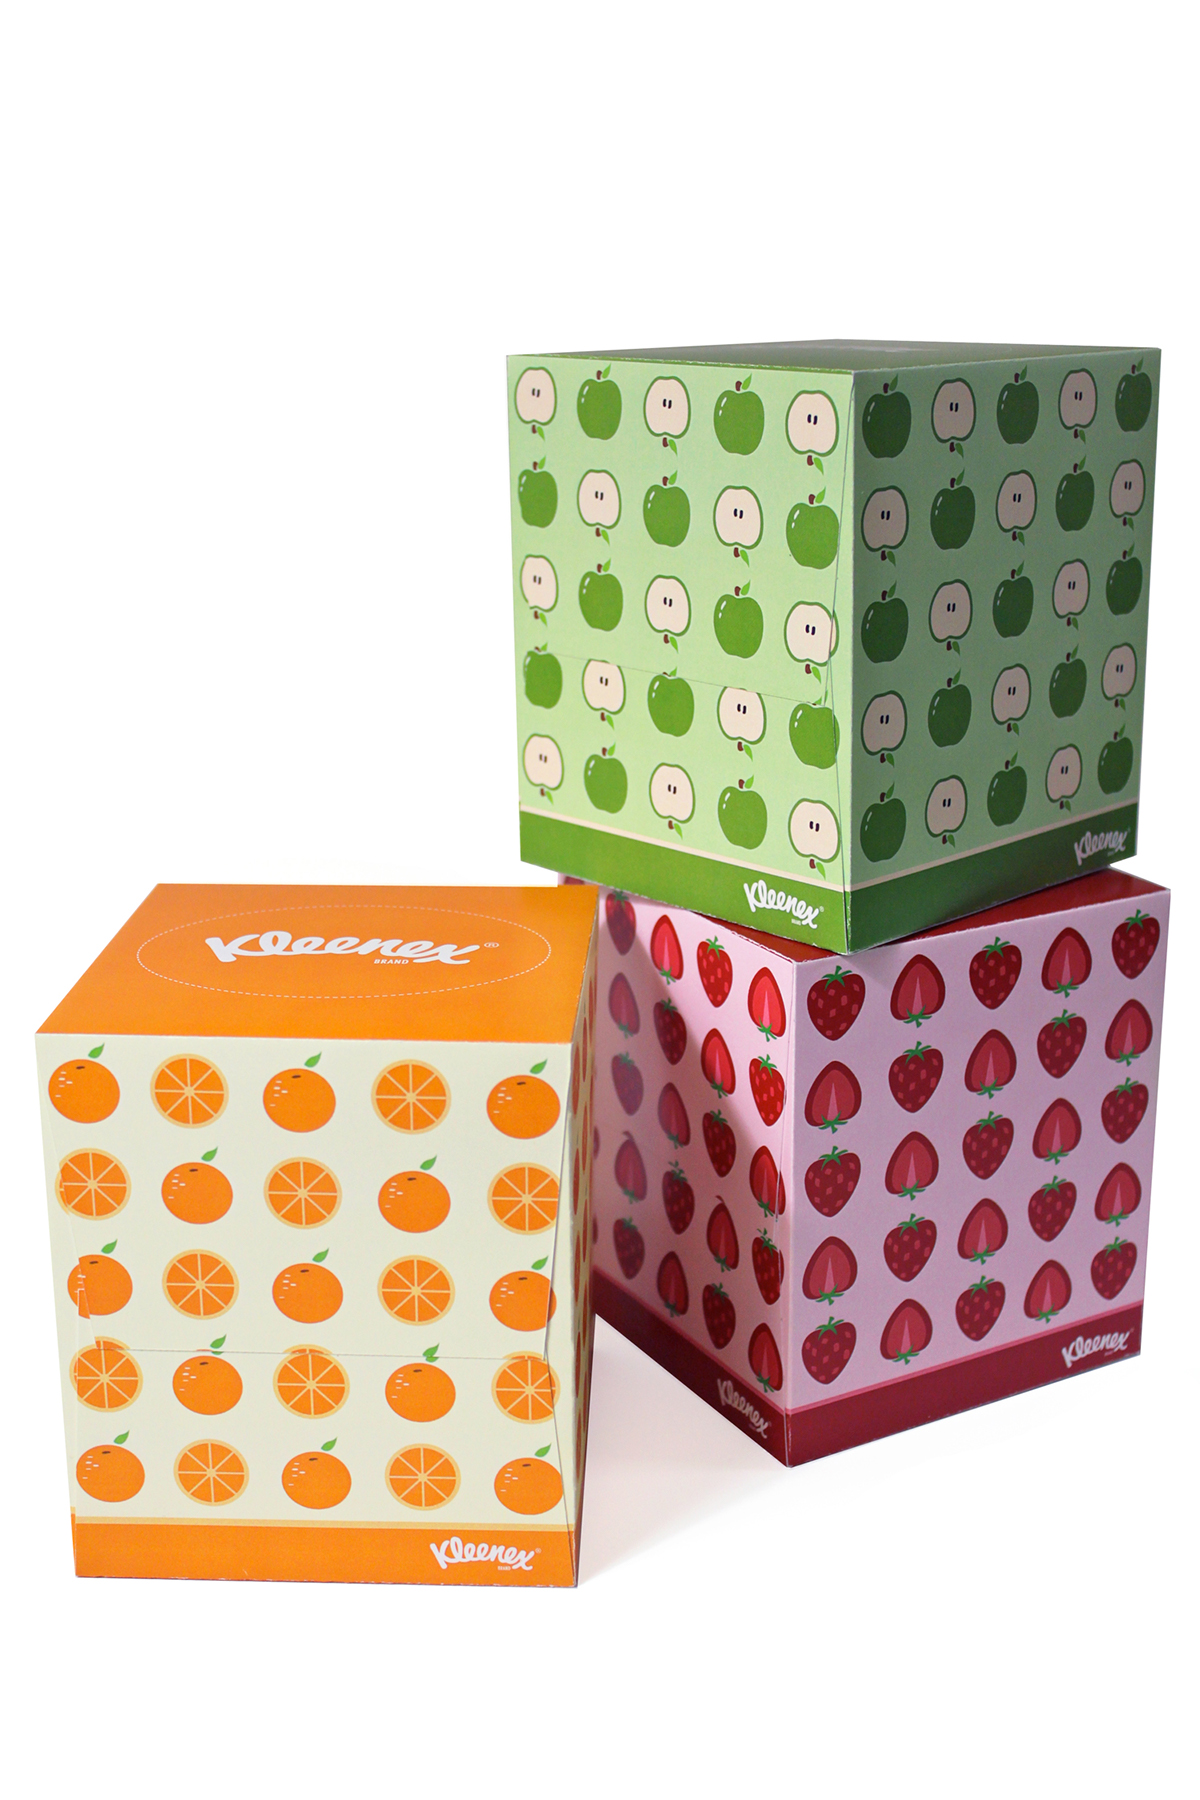 Fruit boxes kleenex Health package orange apple strawberry Tissue Box tissues